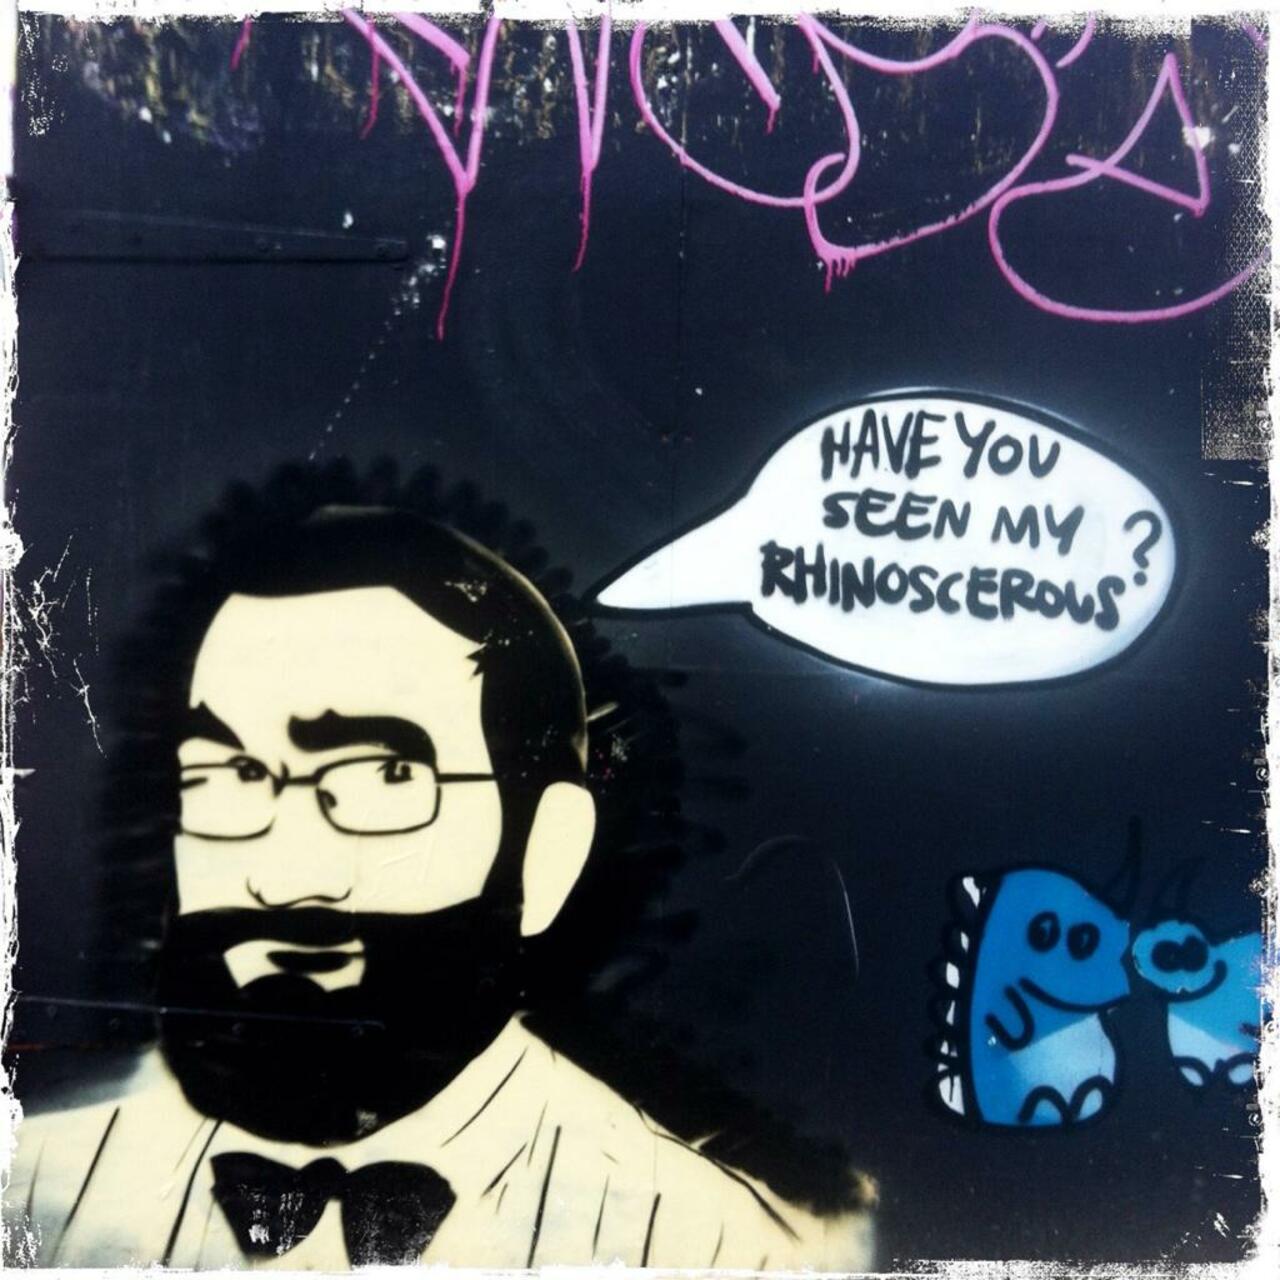 Have you seen my rhinoscerous?

#streetart #art #graffiti http://t.co/N6dD3xmk73